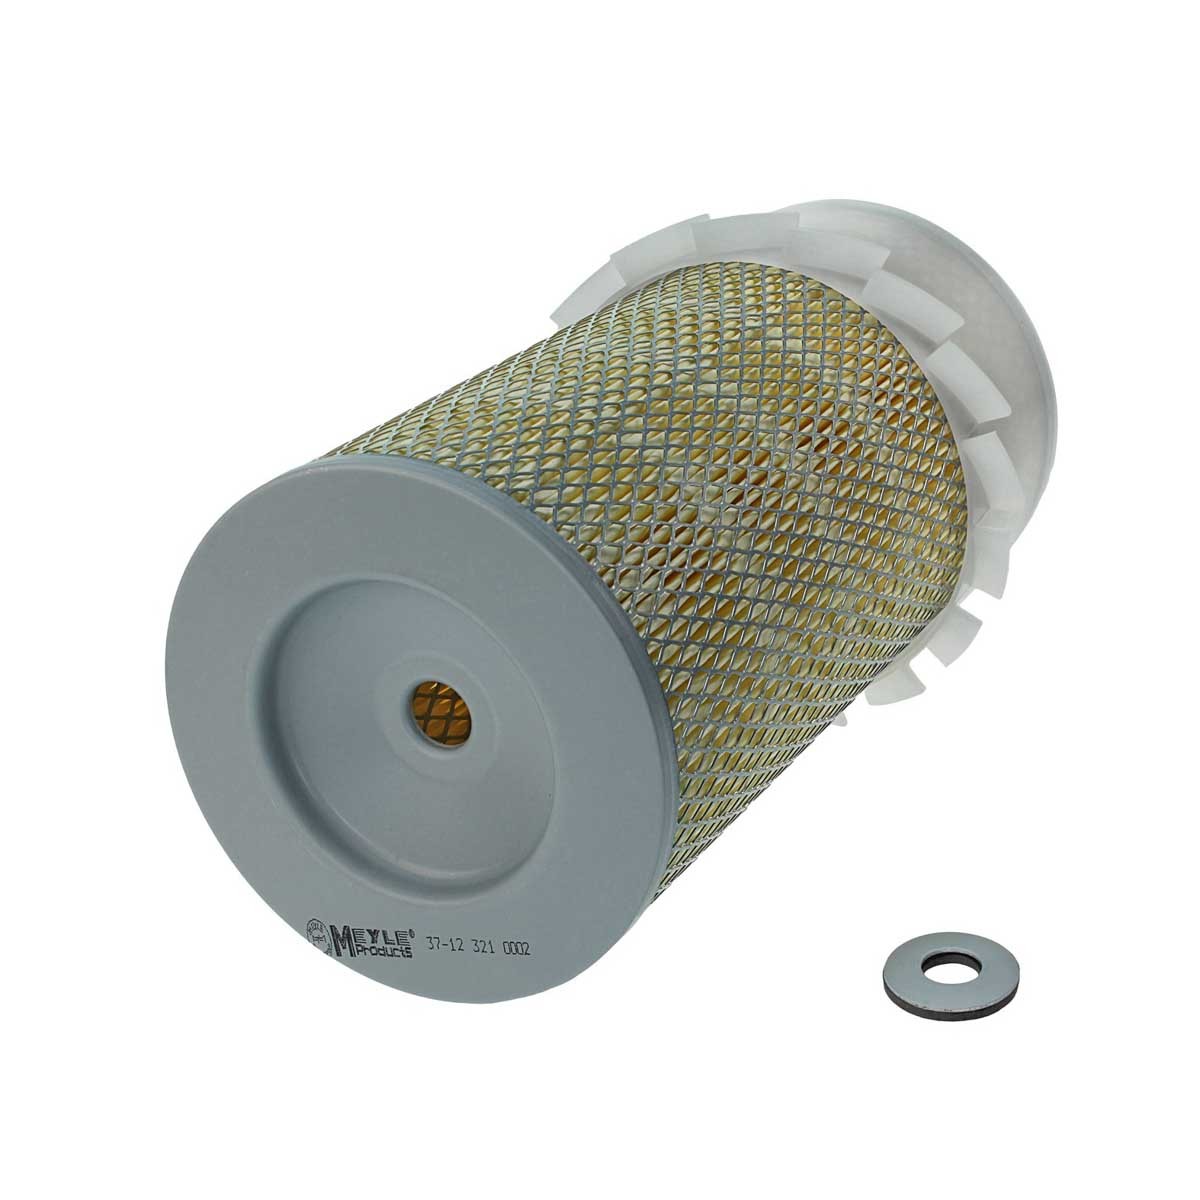 MEYLE 37-12 321 0002 Air filter 288mm, 133mm, Filter Insert, ORIGINAL Quality